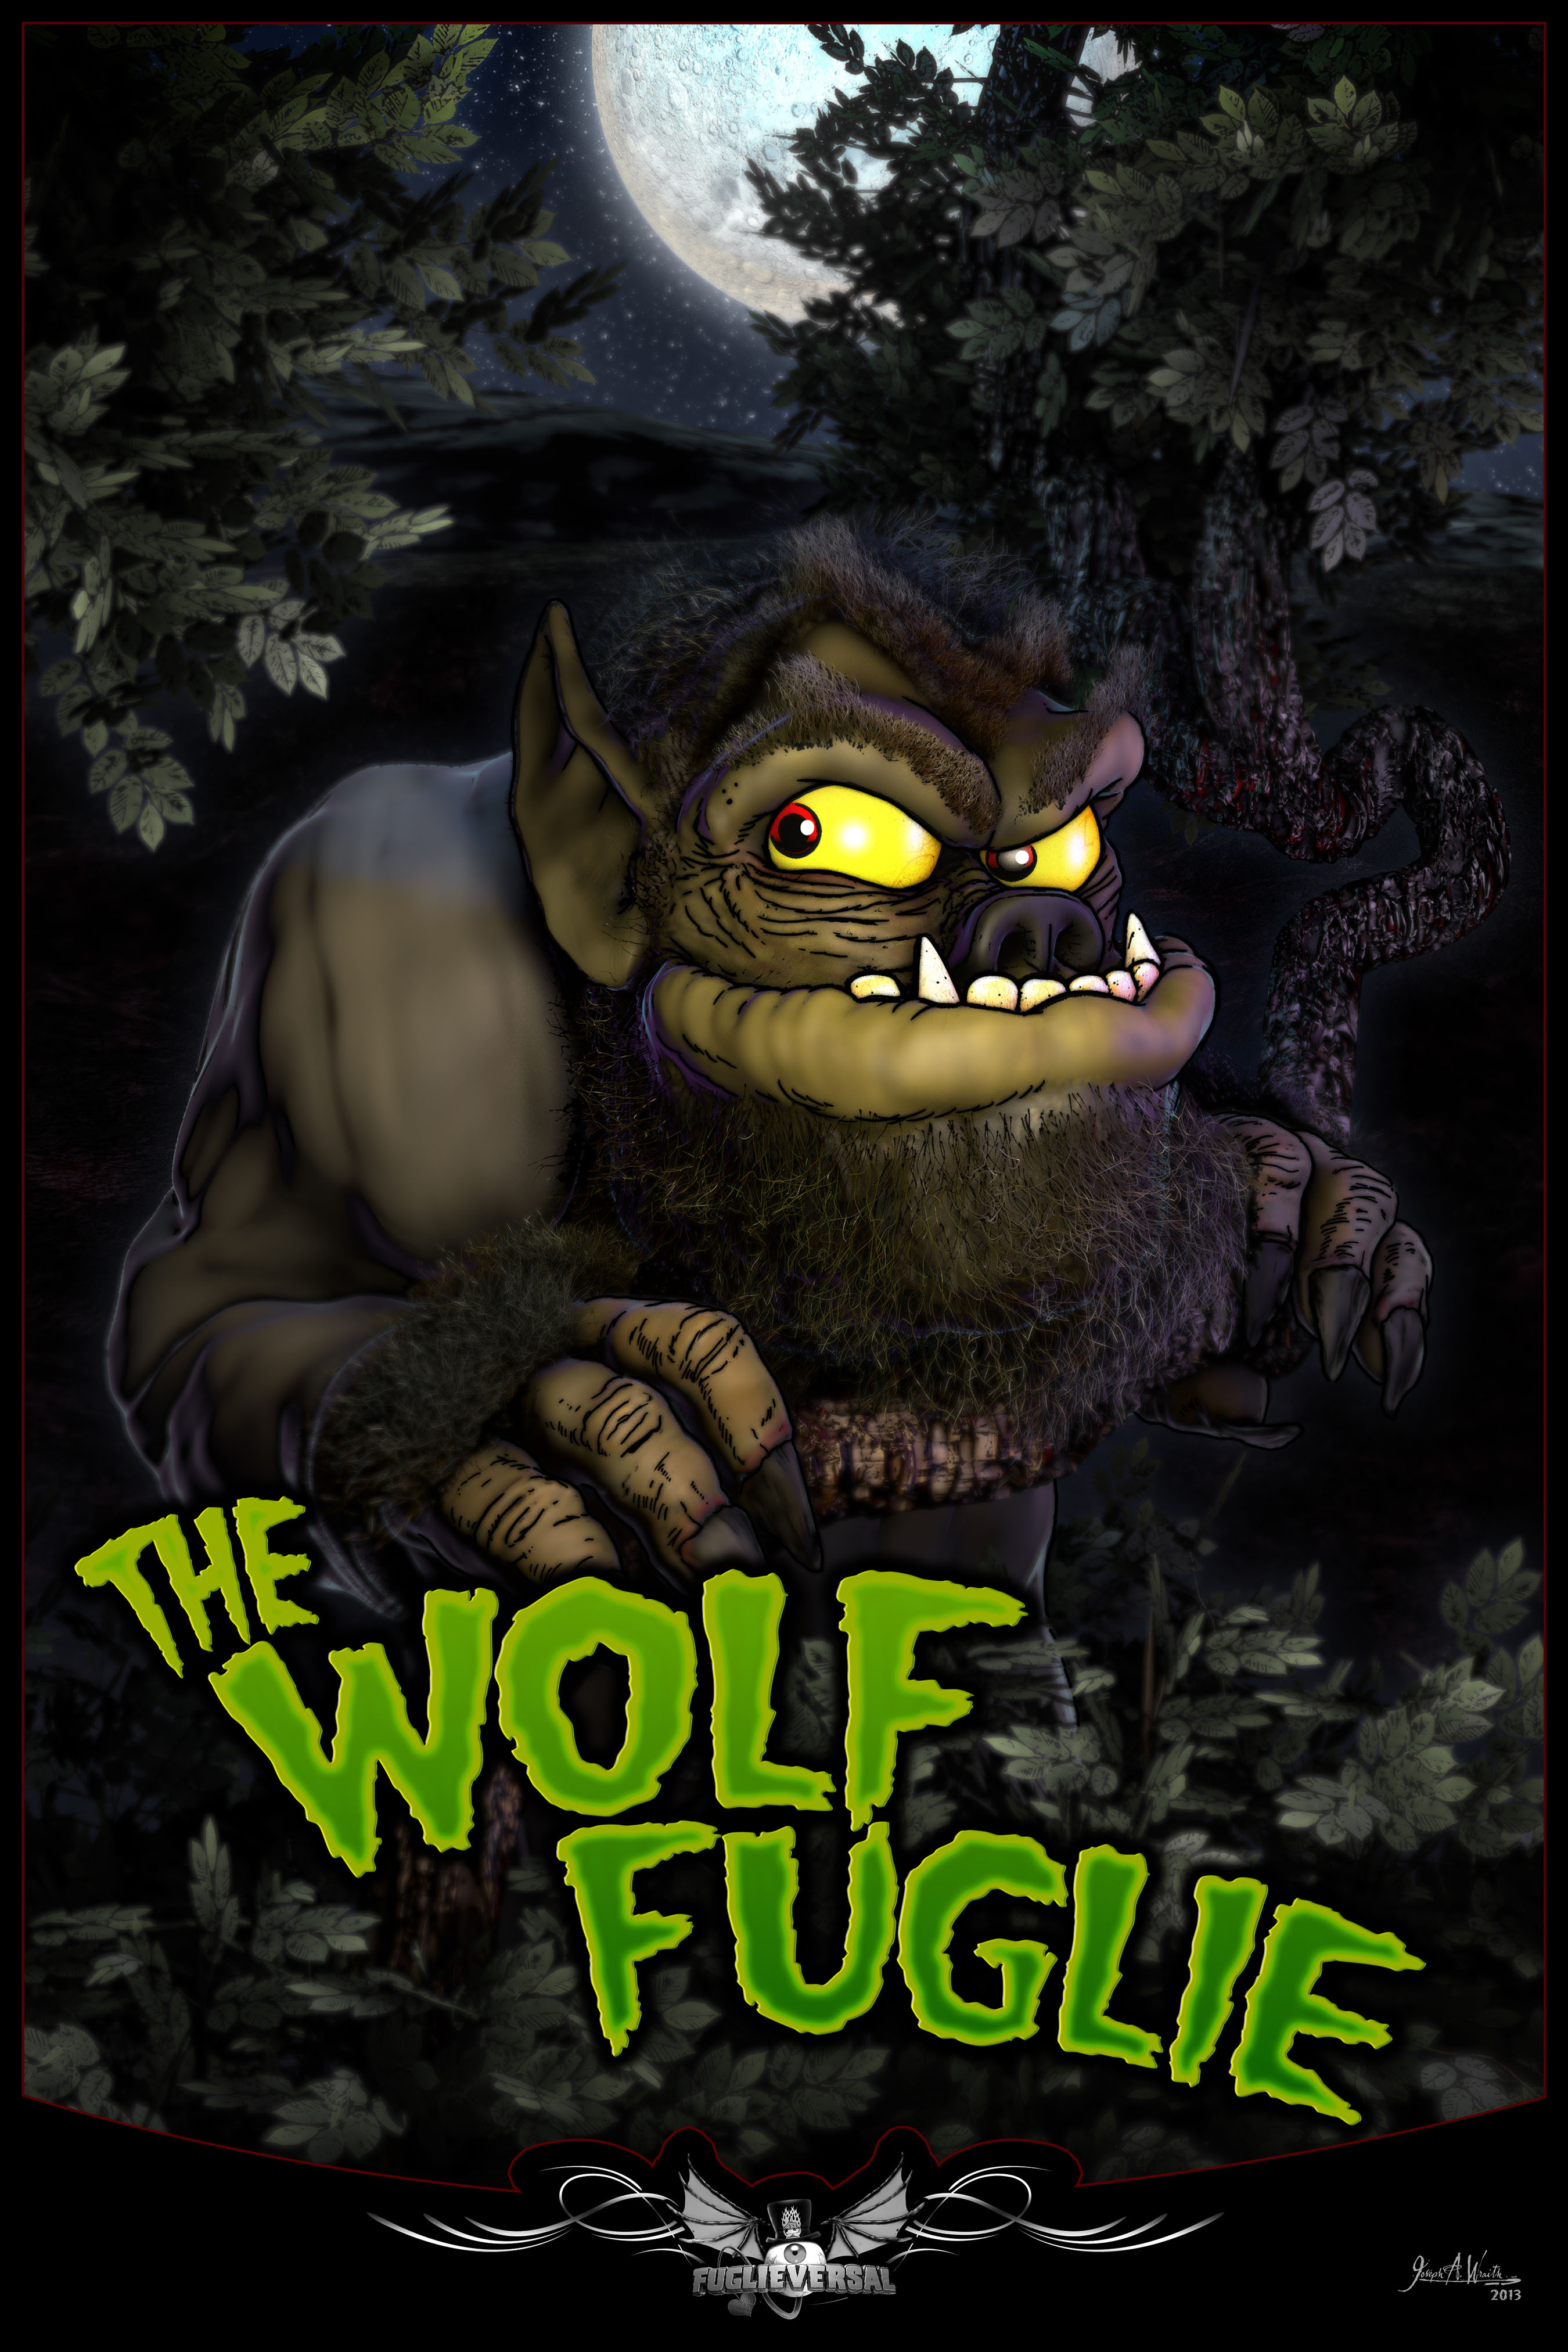 The Fuglies presents Fuglieversal Monsters: The Wolf Fuglie
©2014 Copyright, Joseph A. Wraith